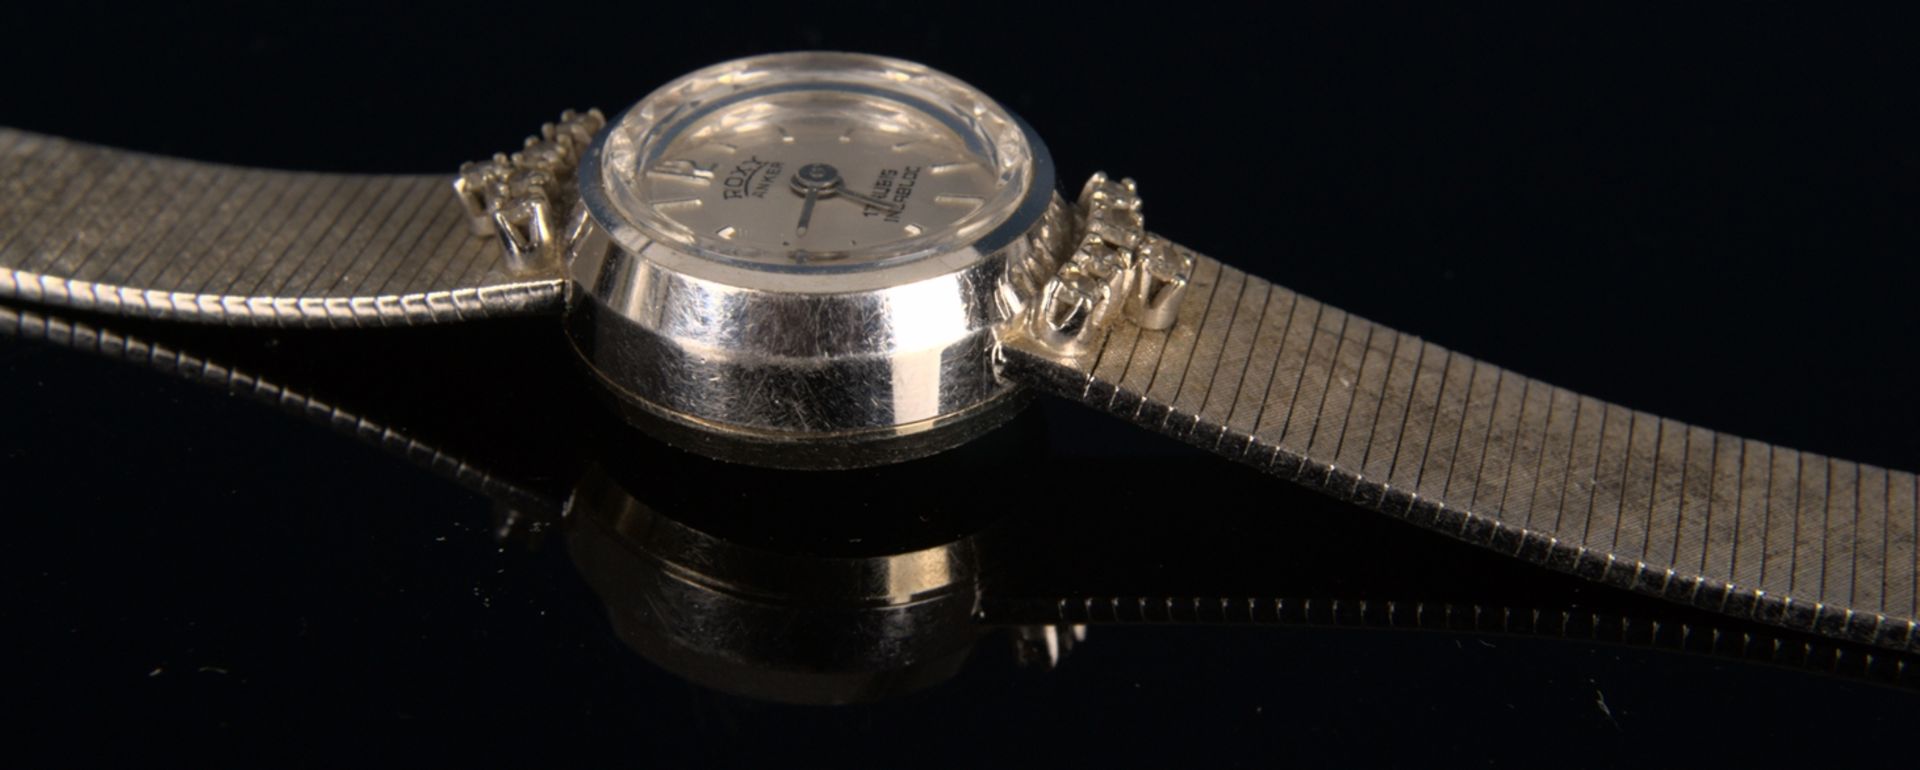 Elegante COCKTAIL - Damenarmbanduhr der Marke "ANKER - ROXY" - 17 Rubis - Incabloc. Handaufzug, - Image 11 of 11